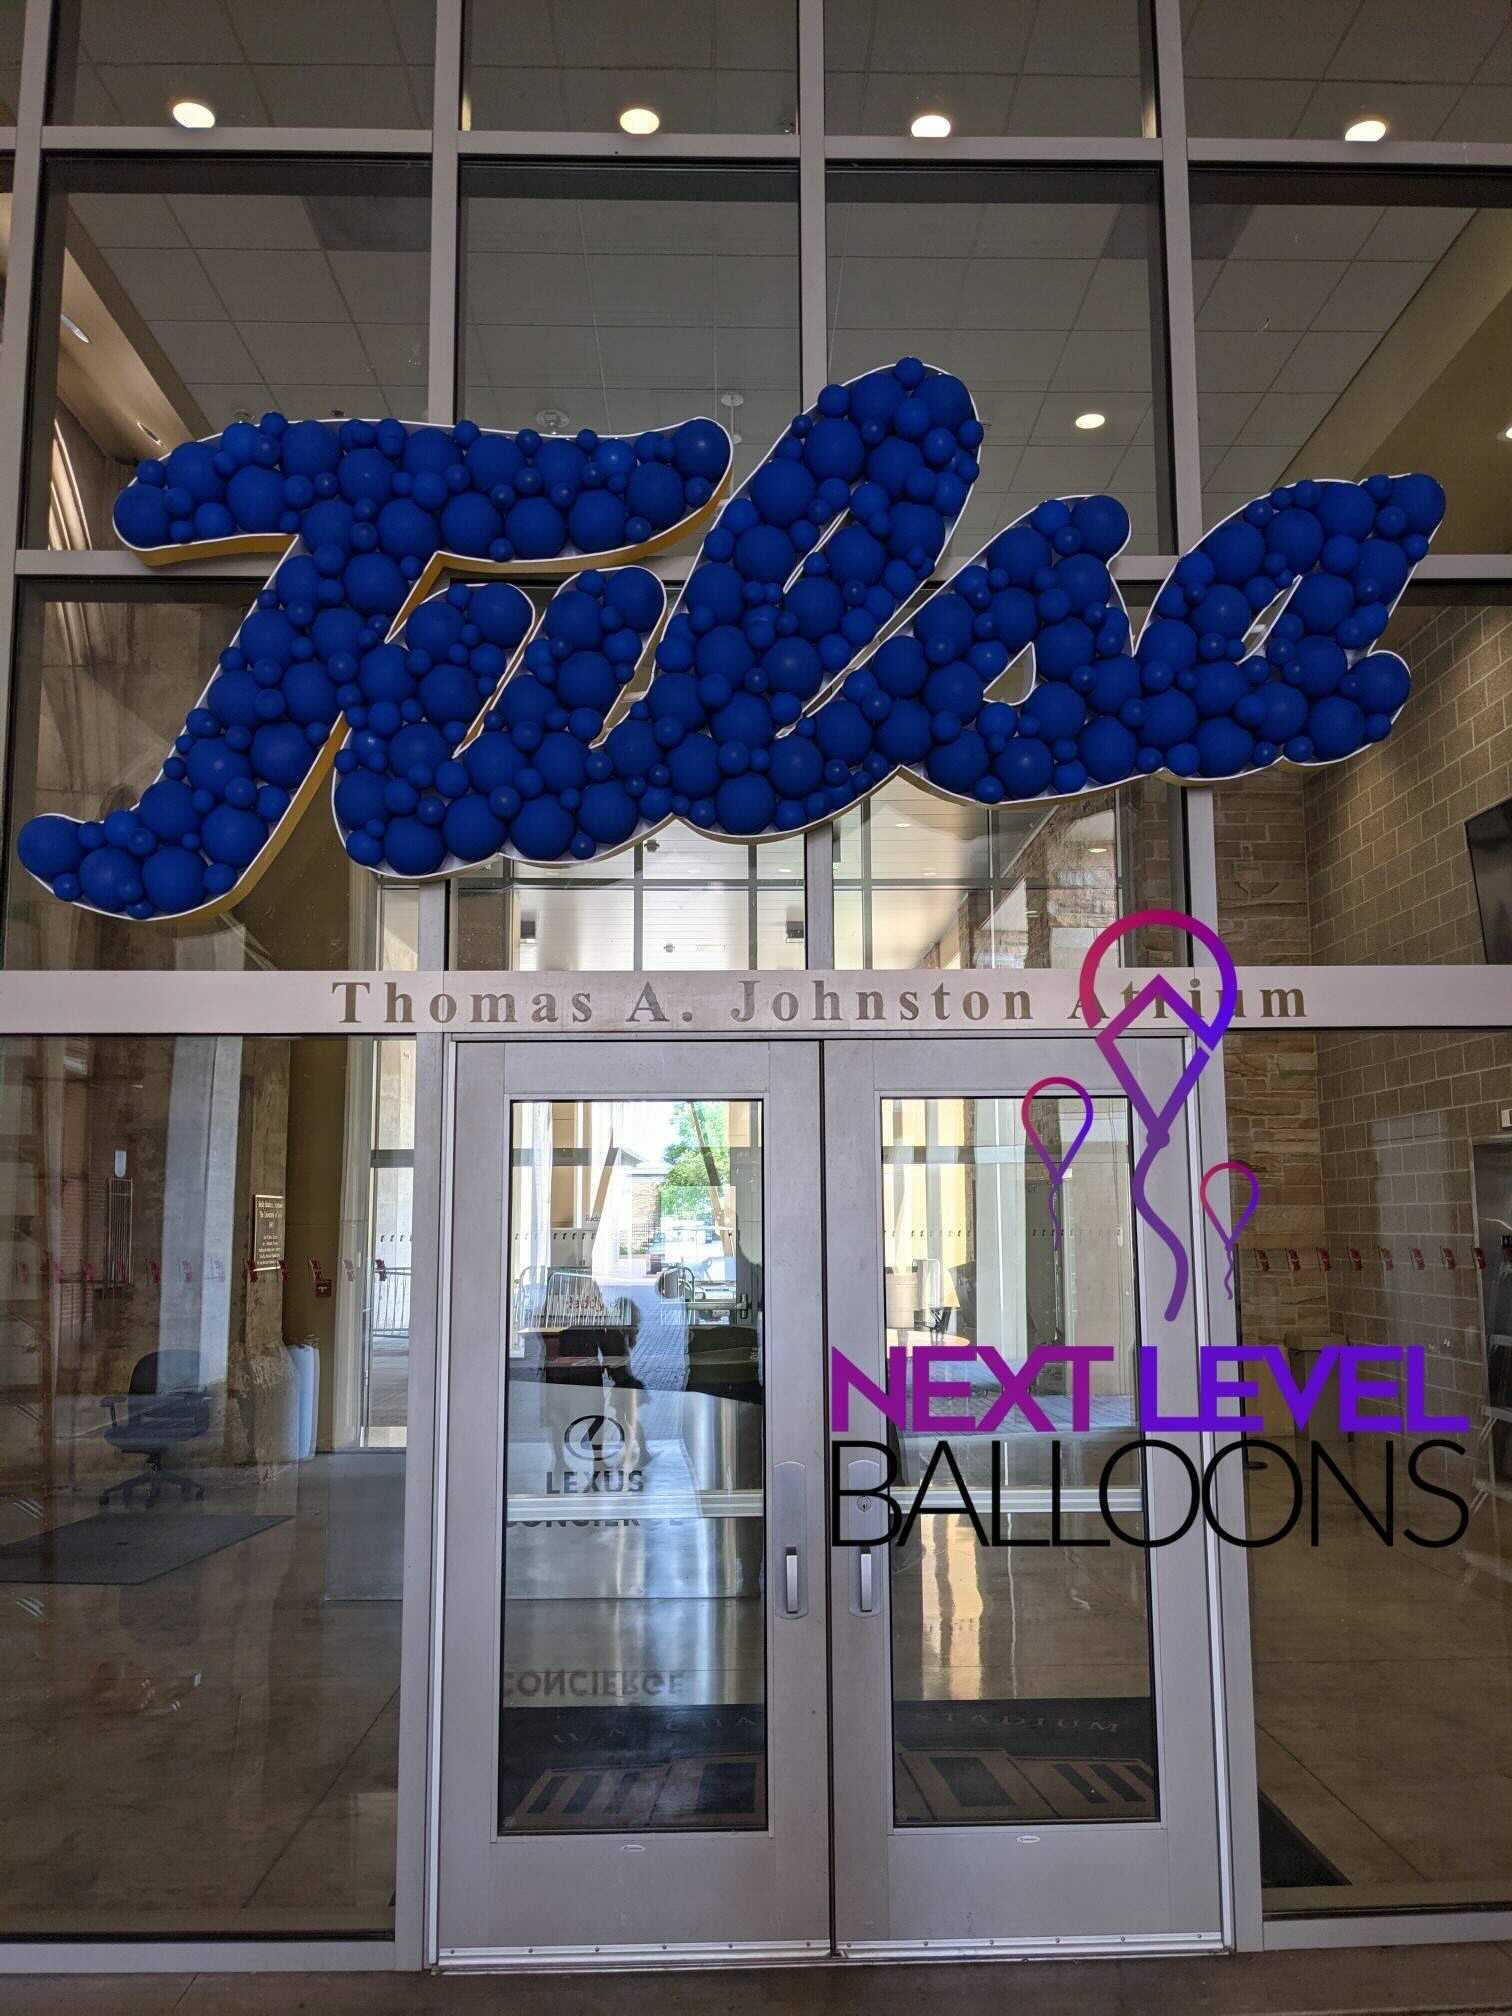 Balloon Sculpture for a Corporate Event at Amazon's new fulfillment center in Tulsa, Oklahoma